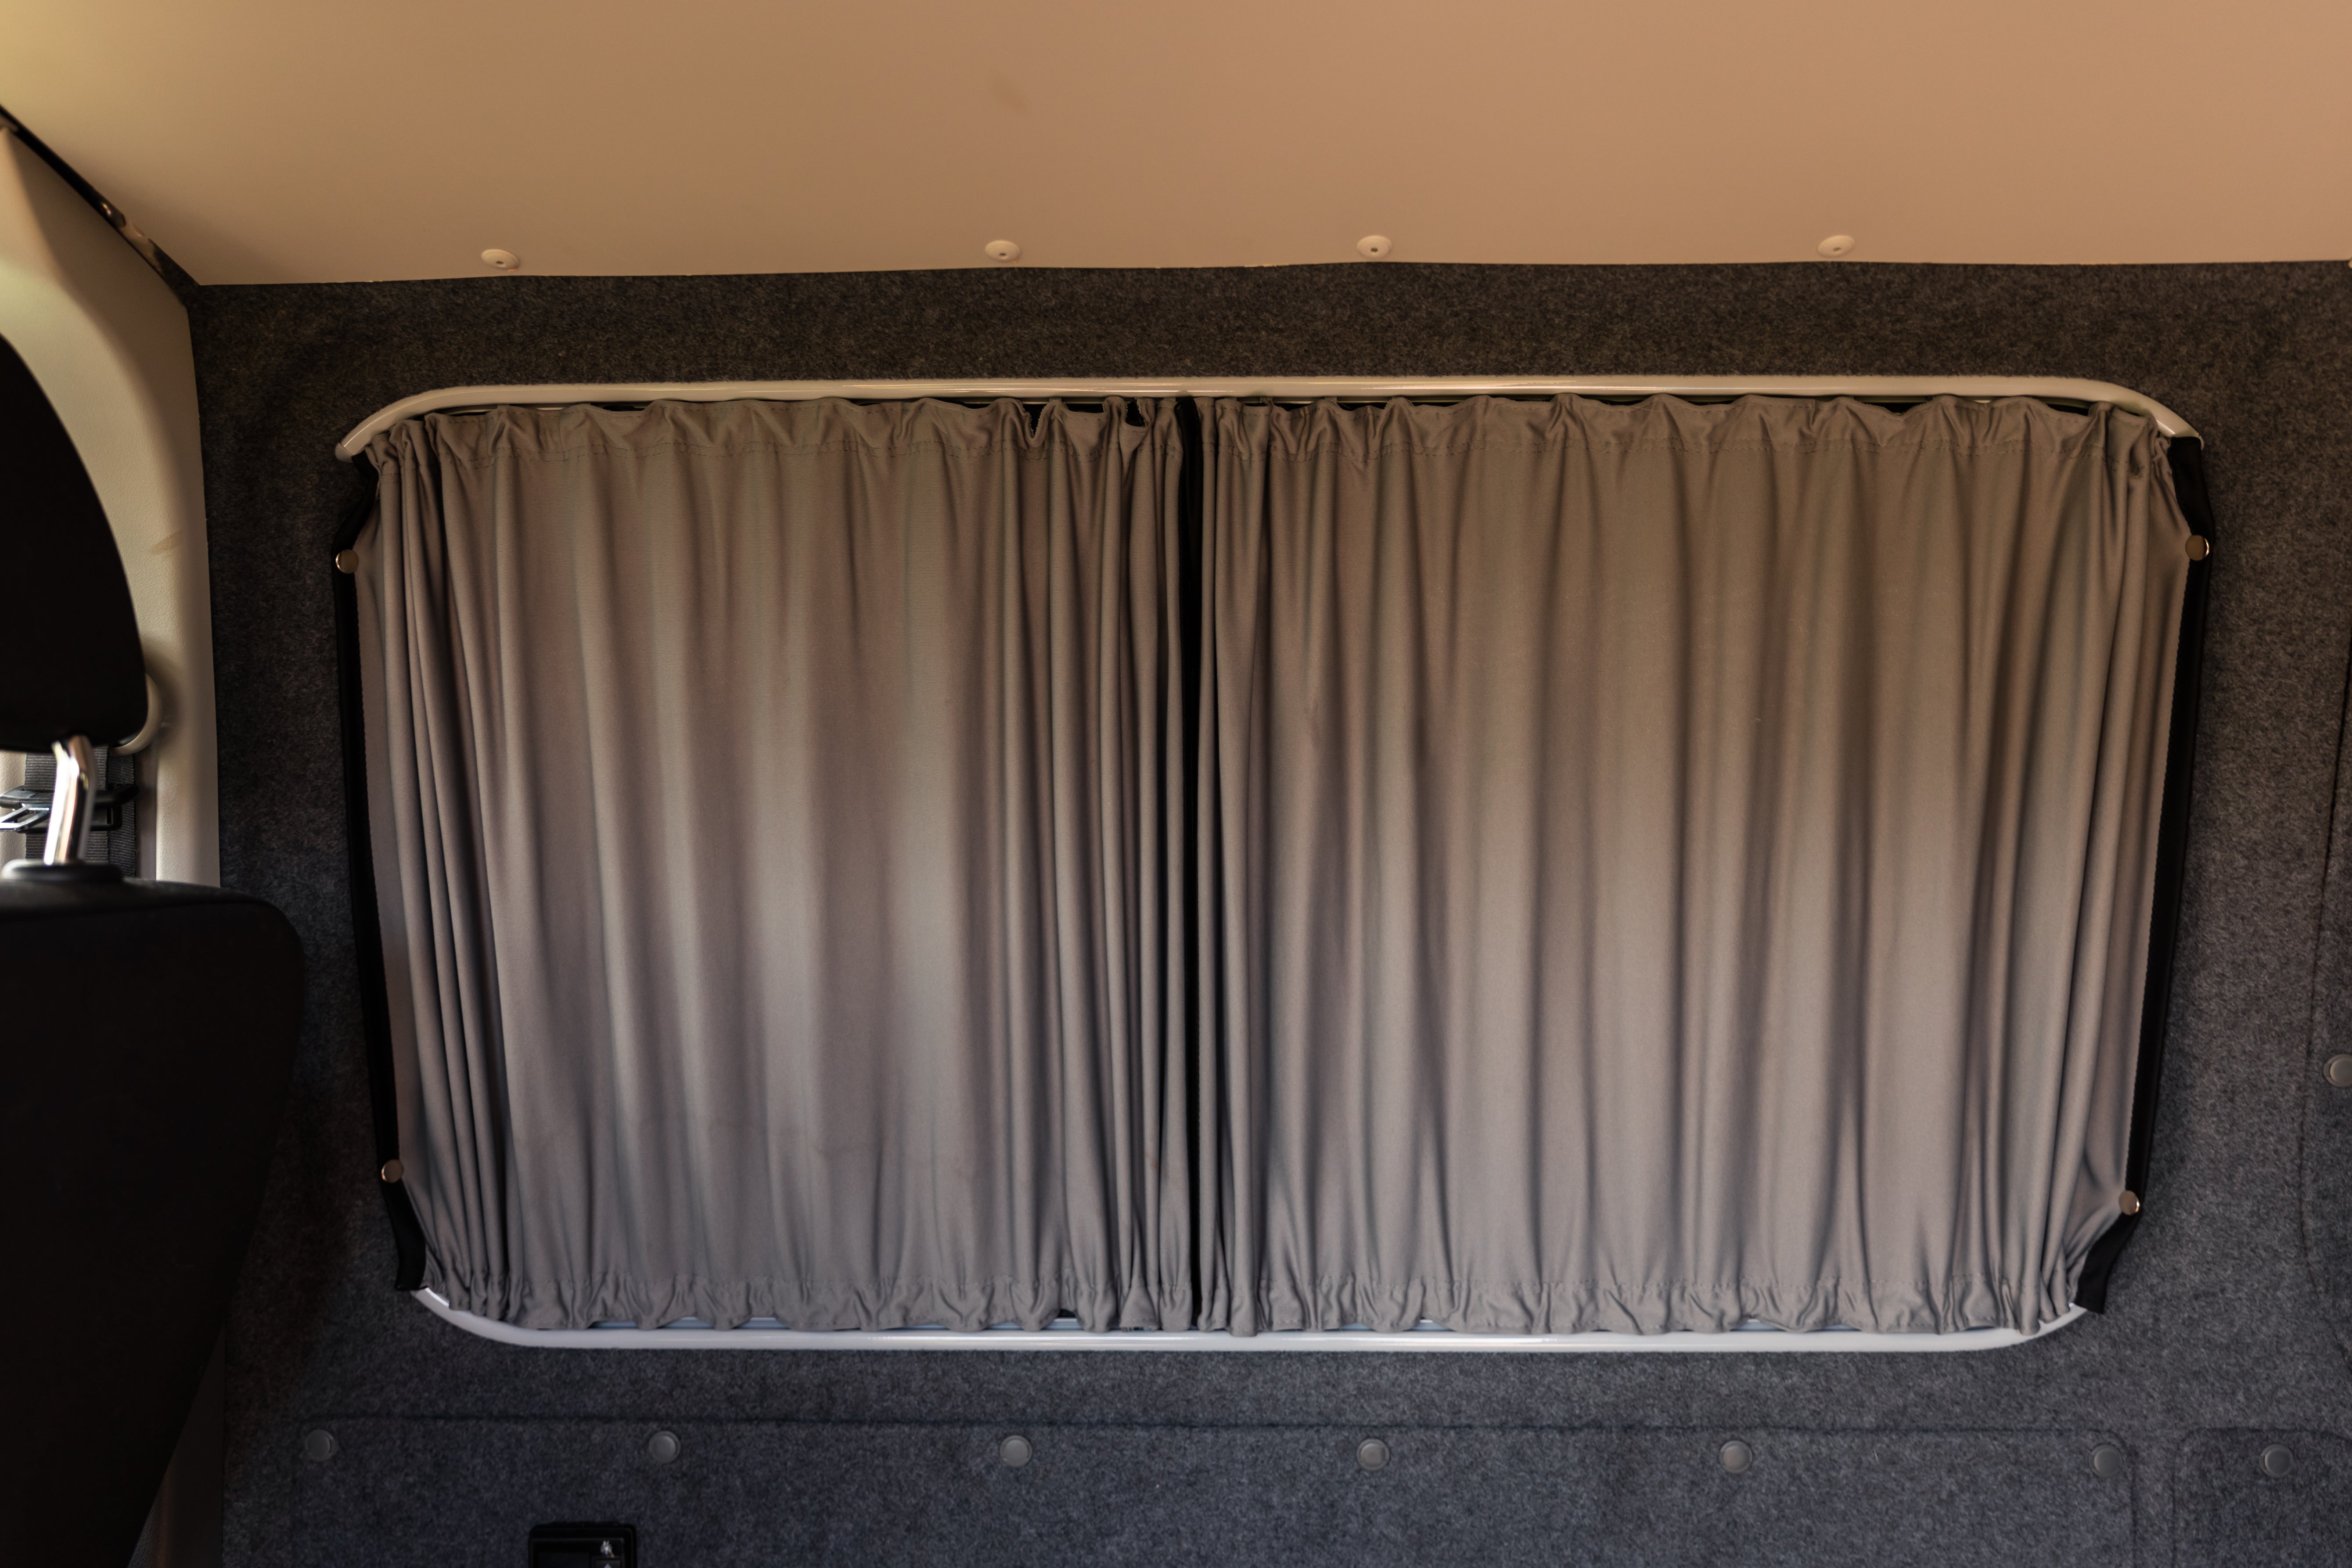 Trafic 2014+ / Vivaro 2014-2018 / Talento 2014+ / NV300 2014+ X82 Curtain Kit - Right Centre Non-Sliding Door (Premium Blackout)